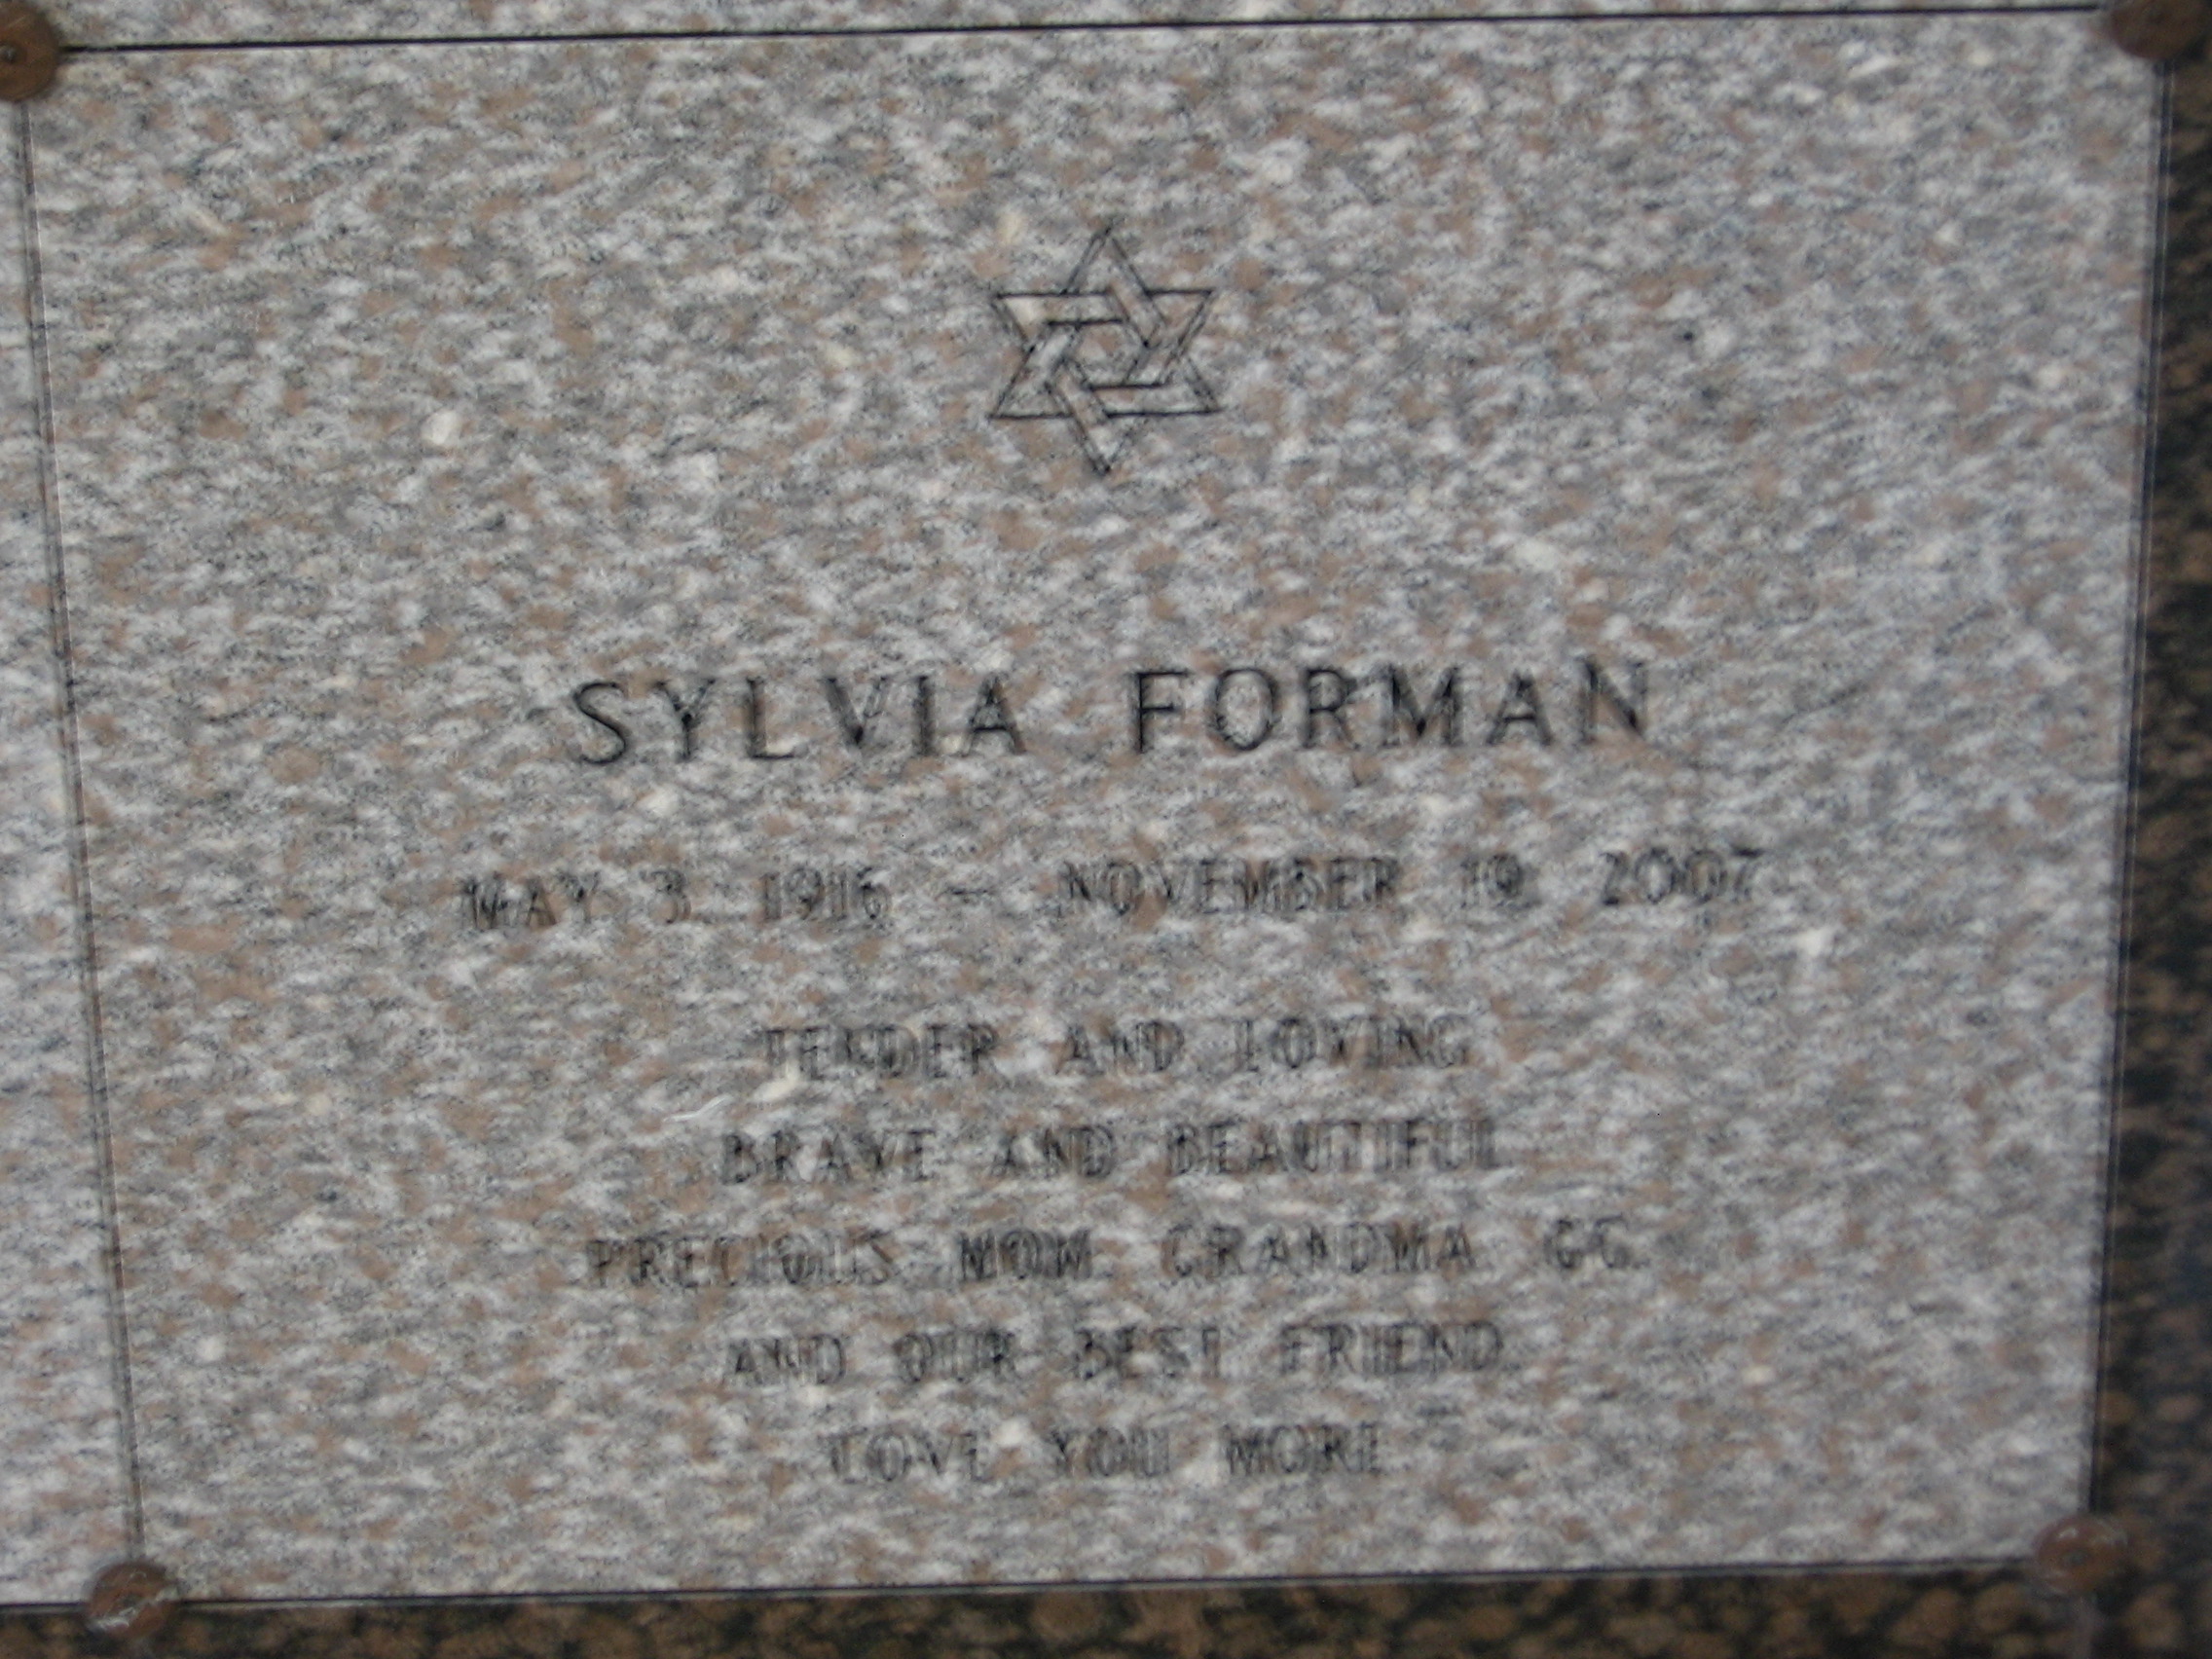 Sylvia Forman